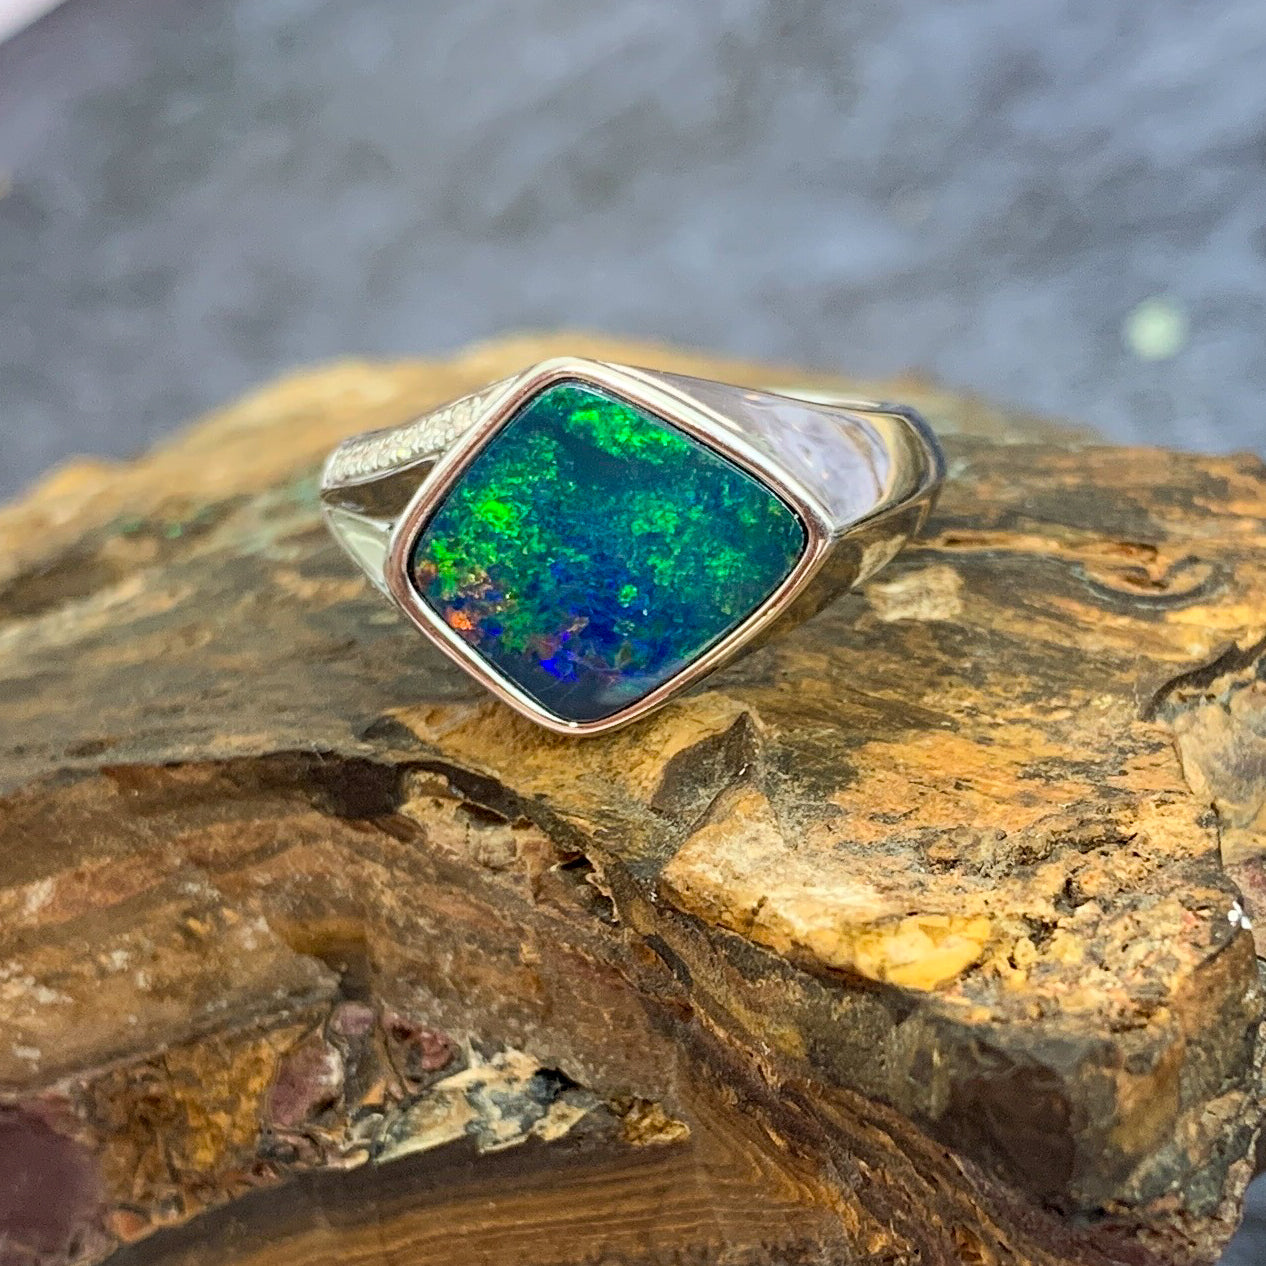 Sterling Silver Opal doublet and cubic zirconia broad ring - Masterpiece Jewellery Opal & Gems Sydney Australia | Online Shop